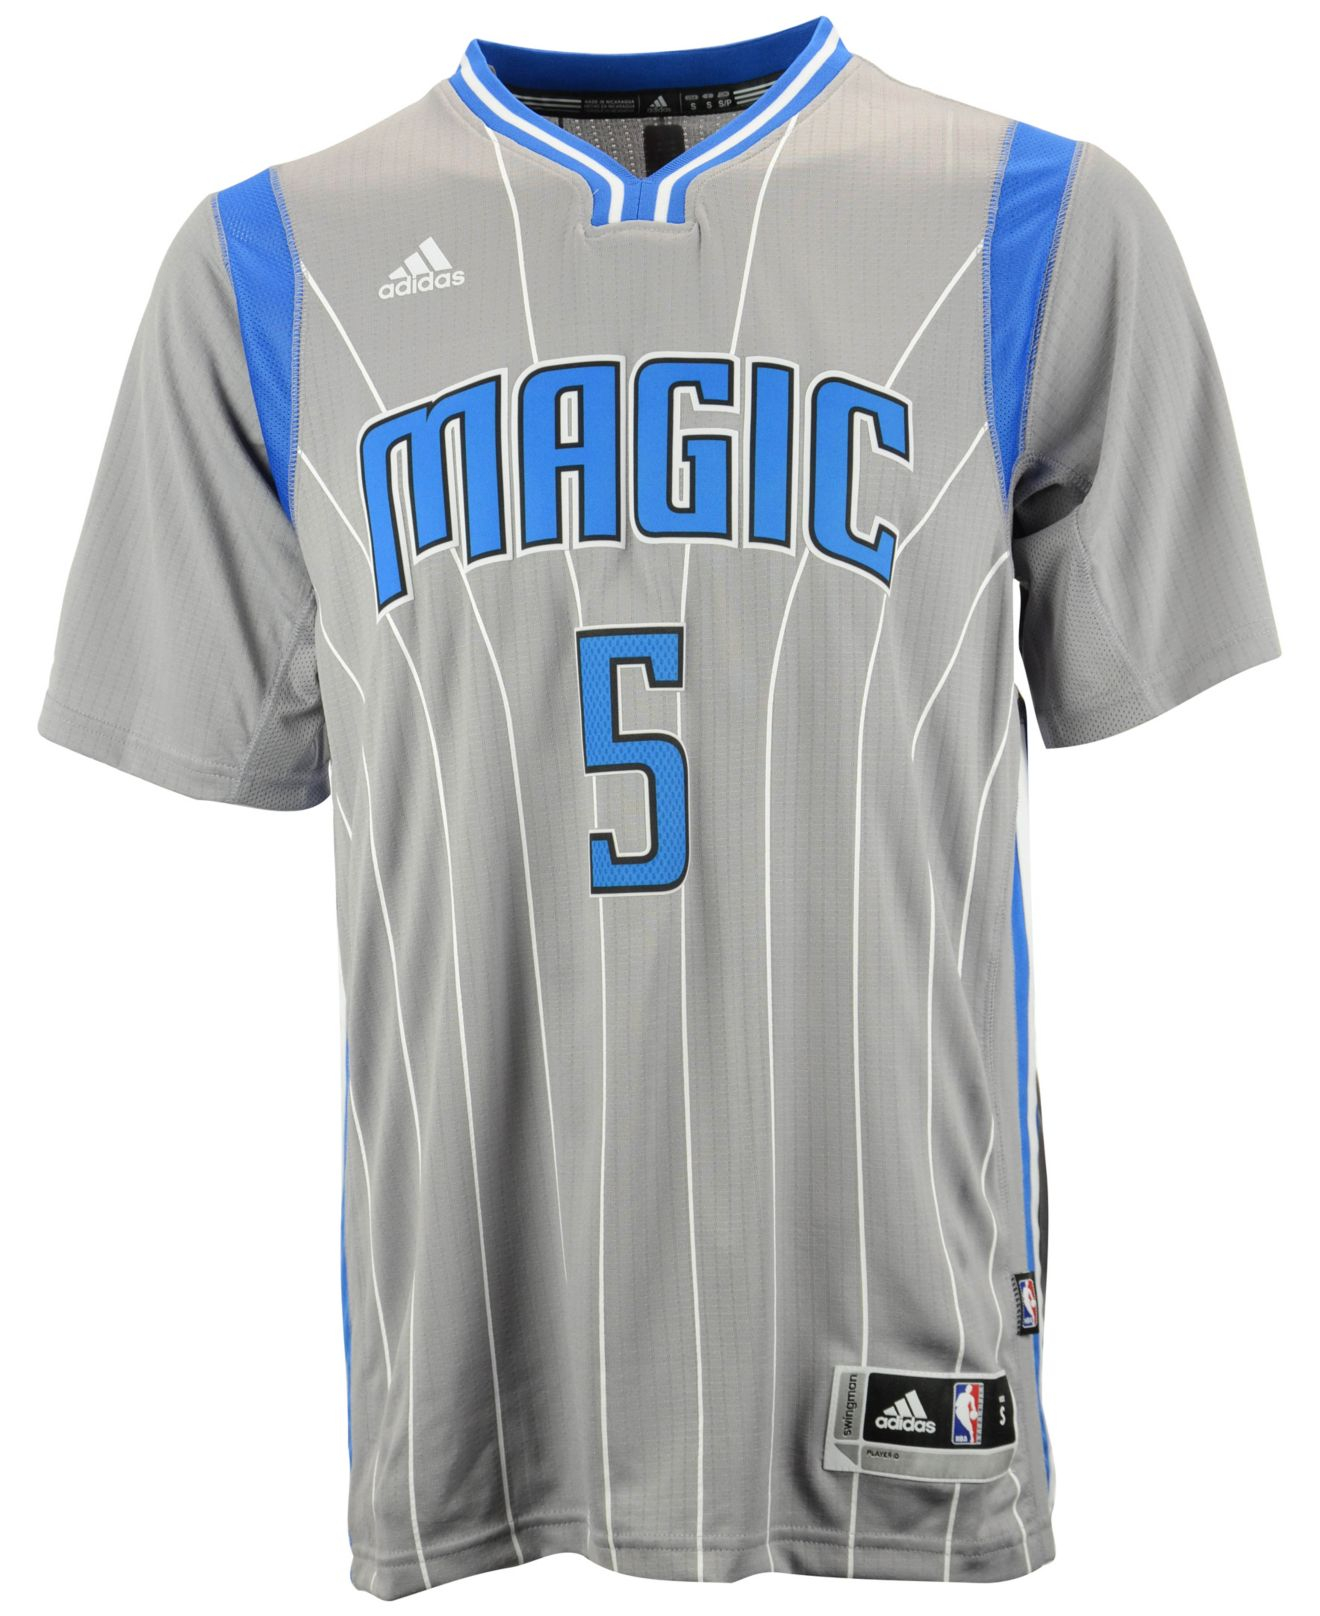 magic sleeve jersey